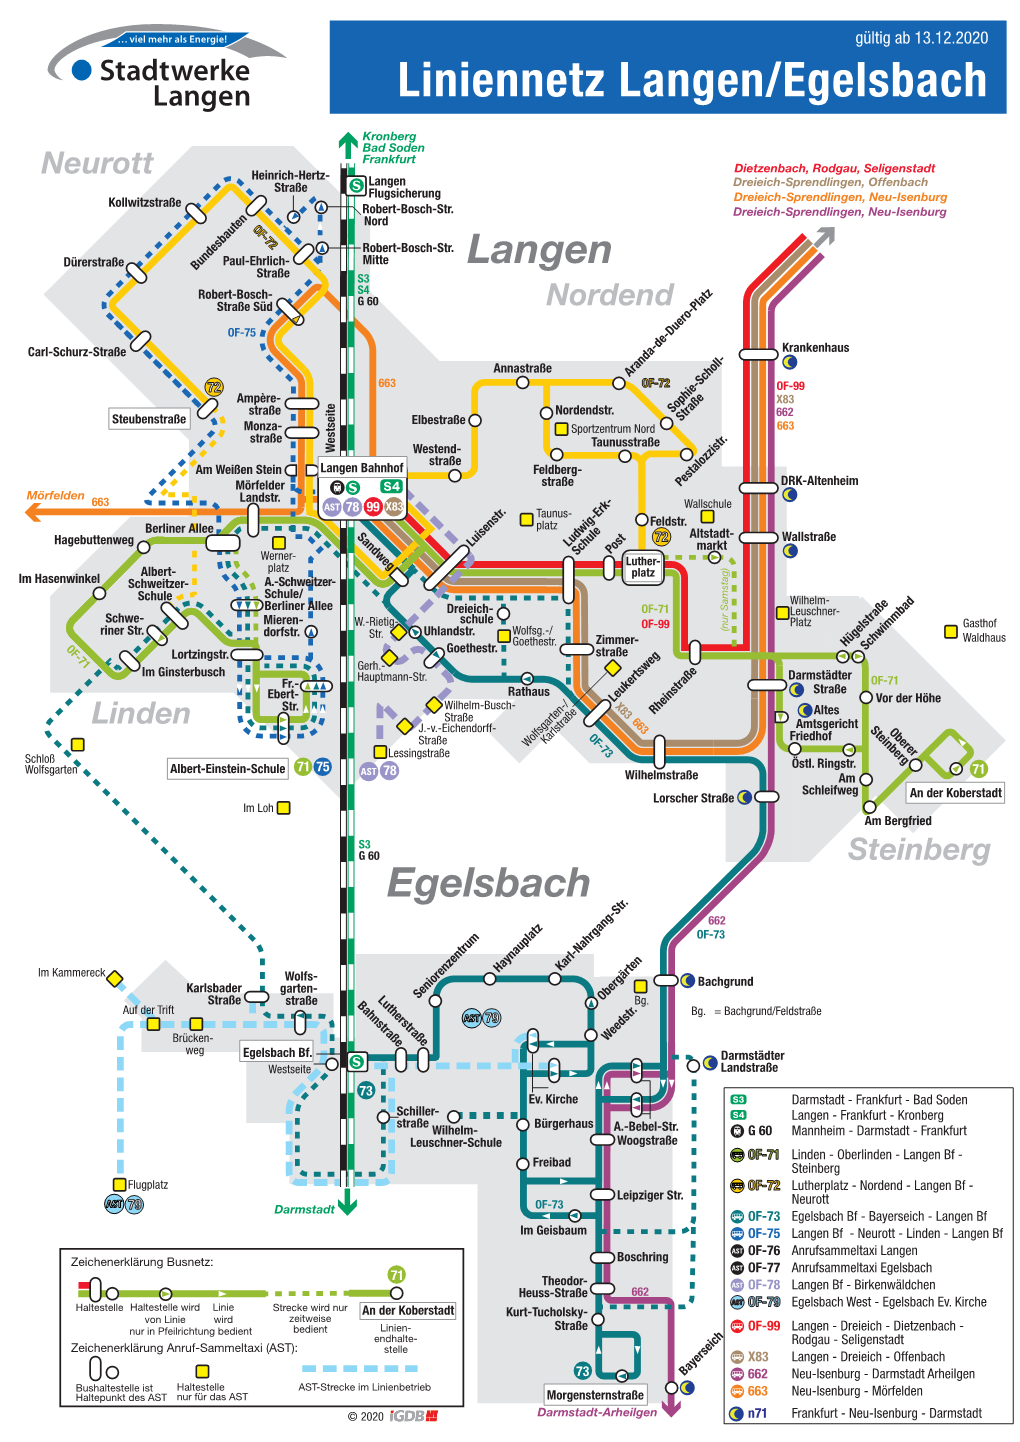 Liniennetz Langen/Egelsbach